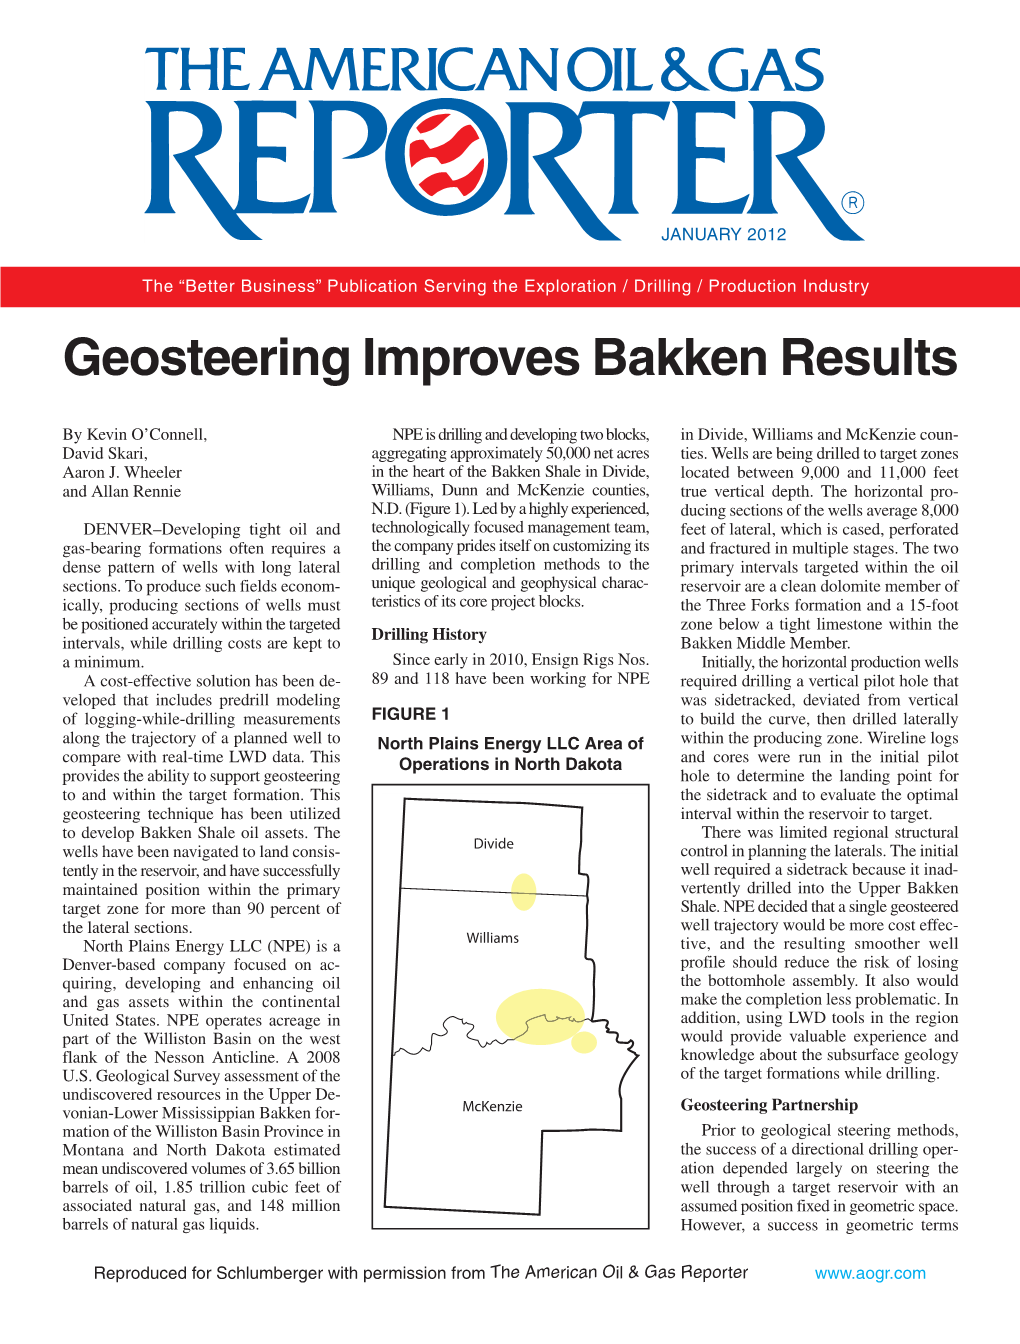 Geosteering Improves Bakken Results